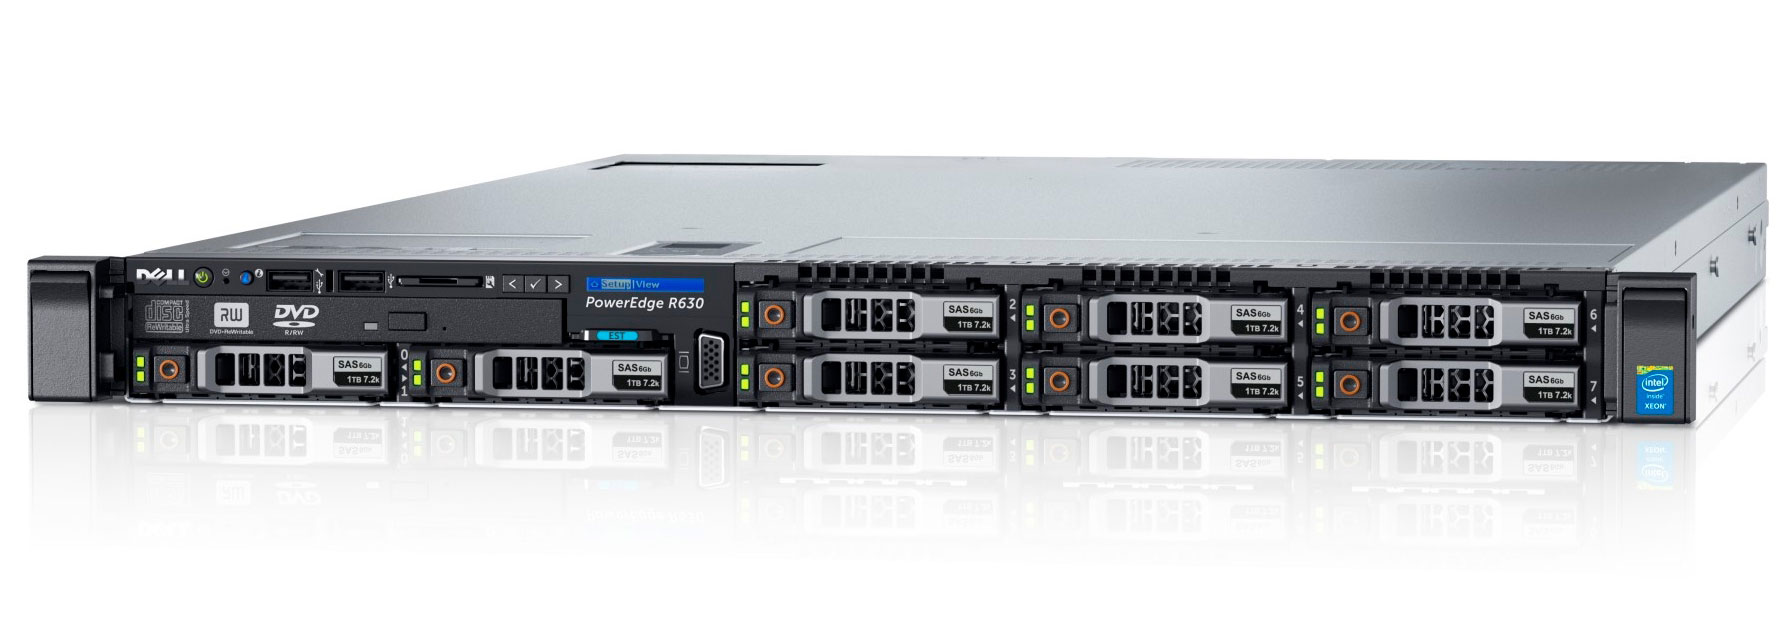 Подробное фото Сервер DELL PowerEdge R630 Xeon 2x E5-2640v3 64Gb 2133P DDR4 8x noHDD 2.5", SAS RAID Perc H730 mini, 1024Mb, DVD, 2*PSU